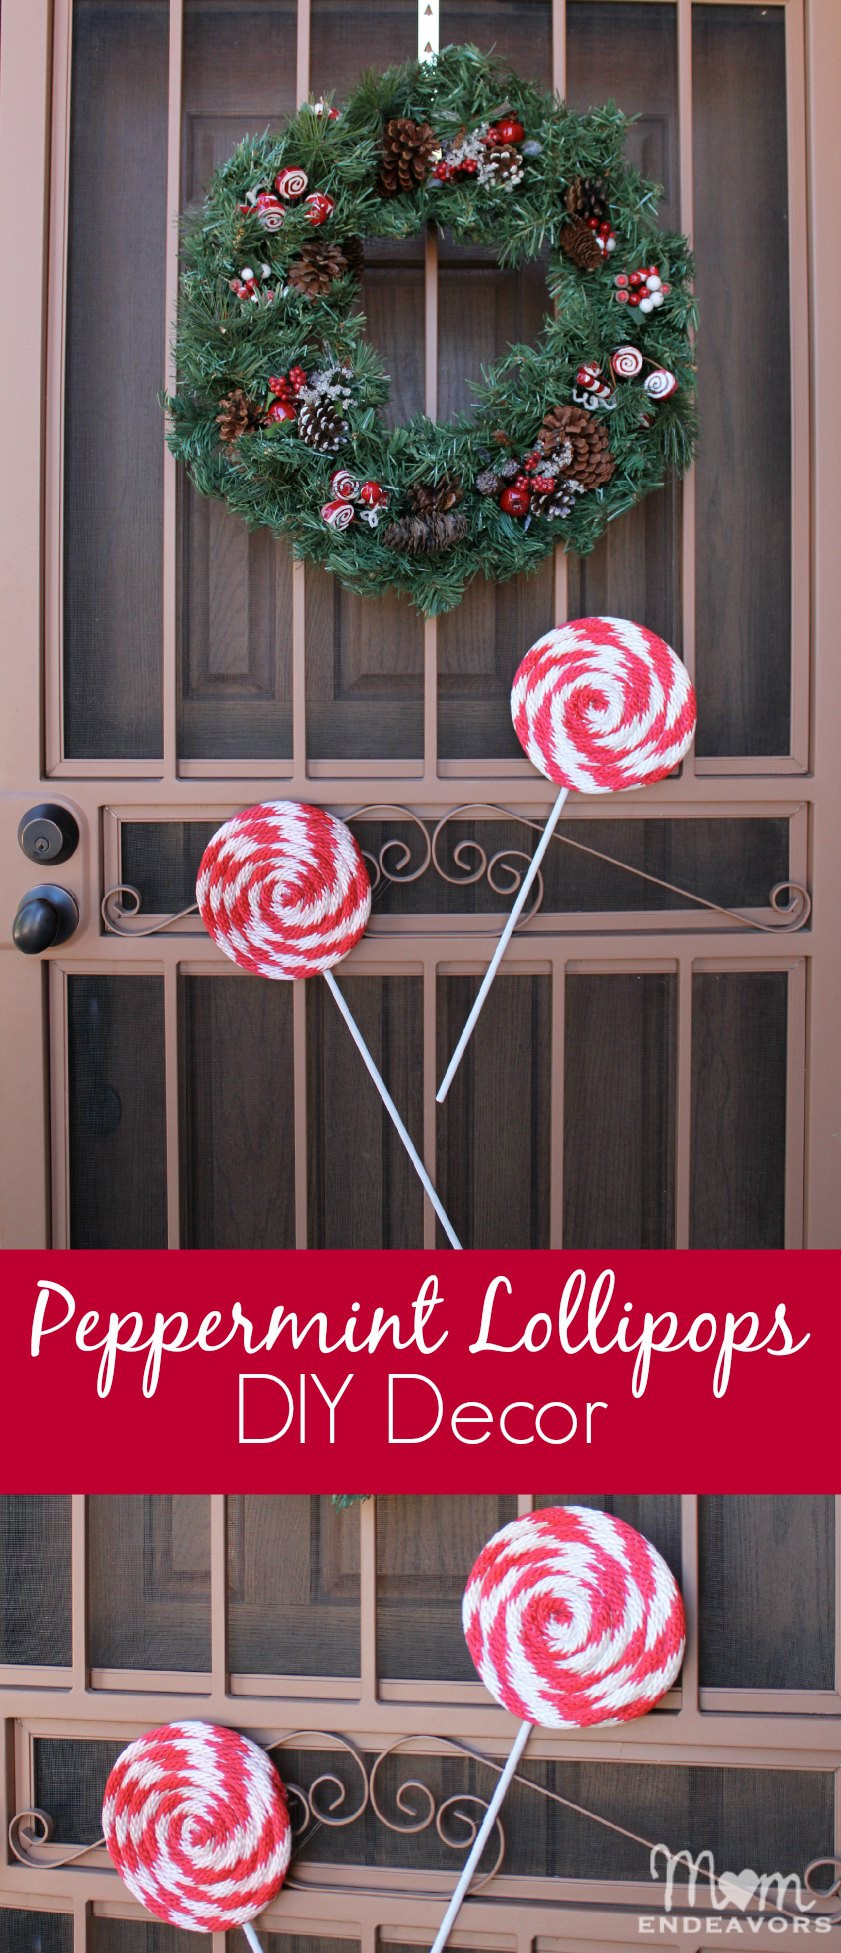 Best ideas about DIY Christmas Photos
. Save or Pin DIY Peppermint Lollipops Christmas Decor Now.